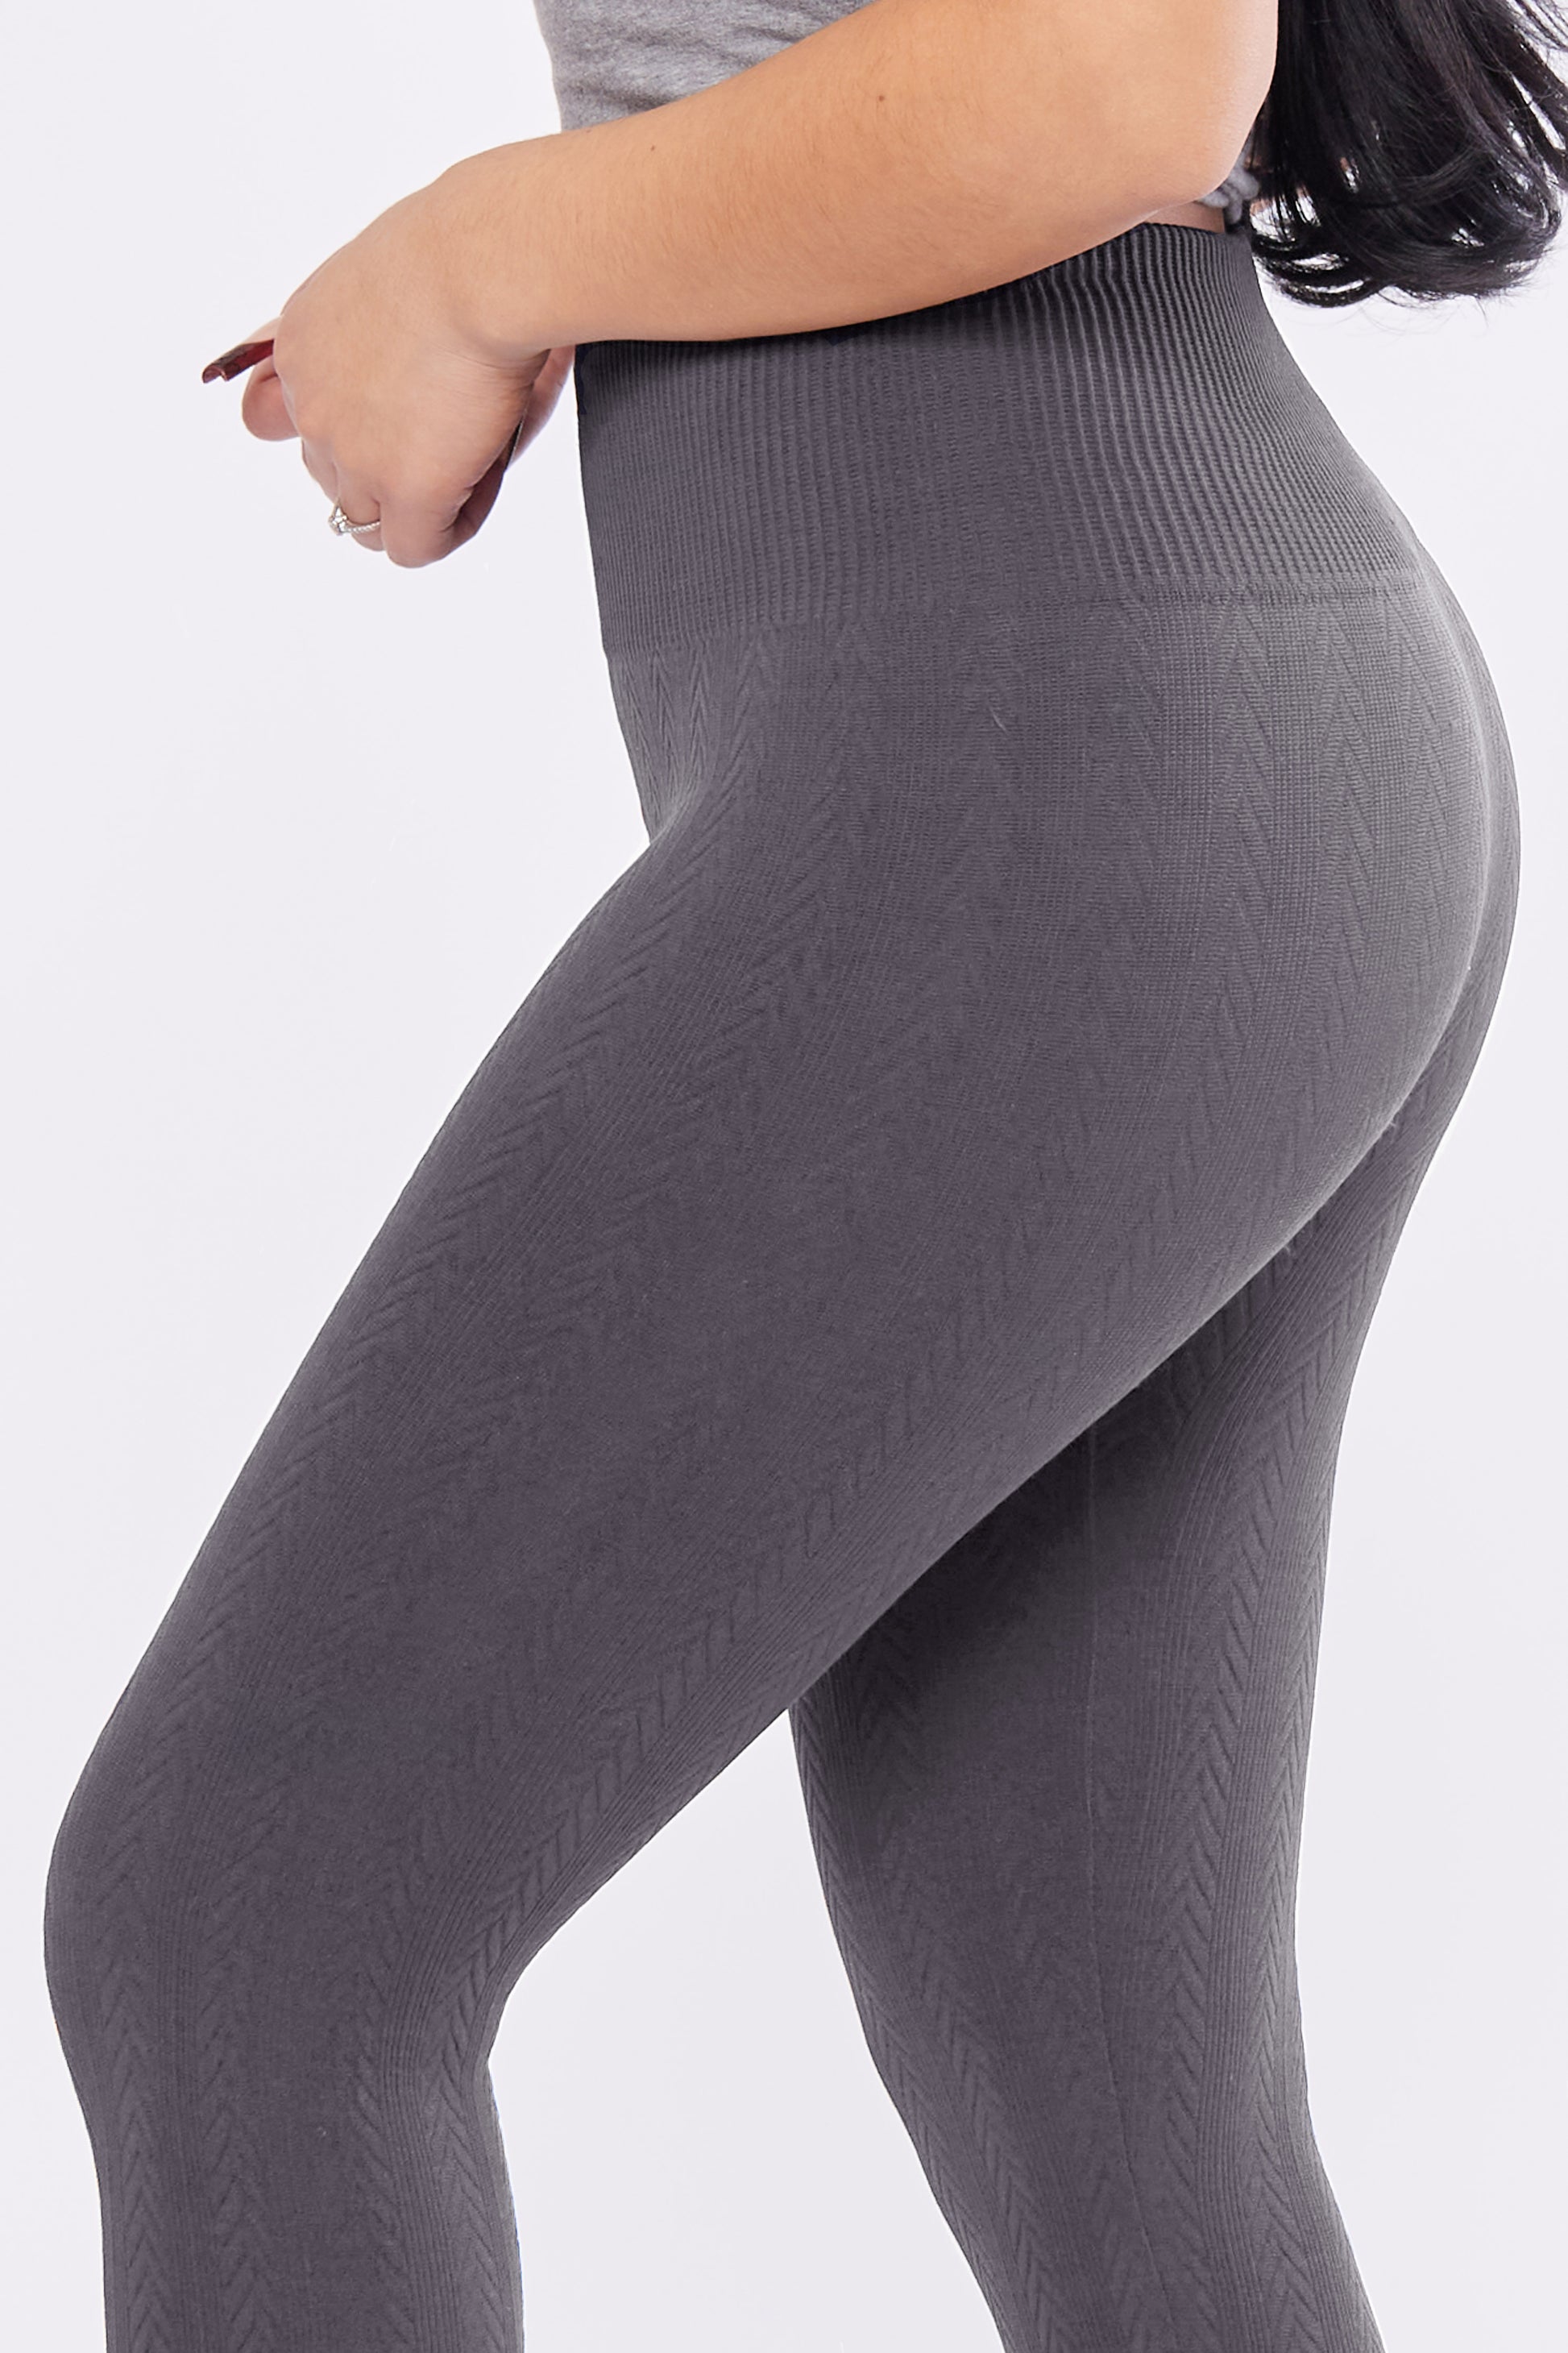 Thin Leggings Walmarthigh Waist Spandex Leggings For Women - Ribbed Gym  Tights With Fleece Lining